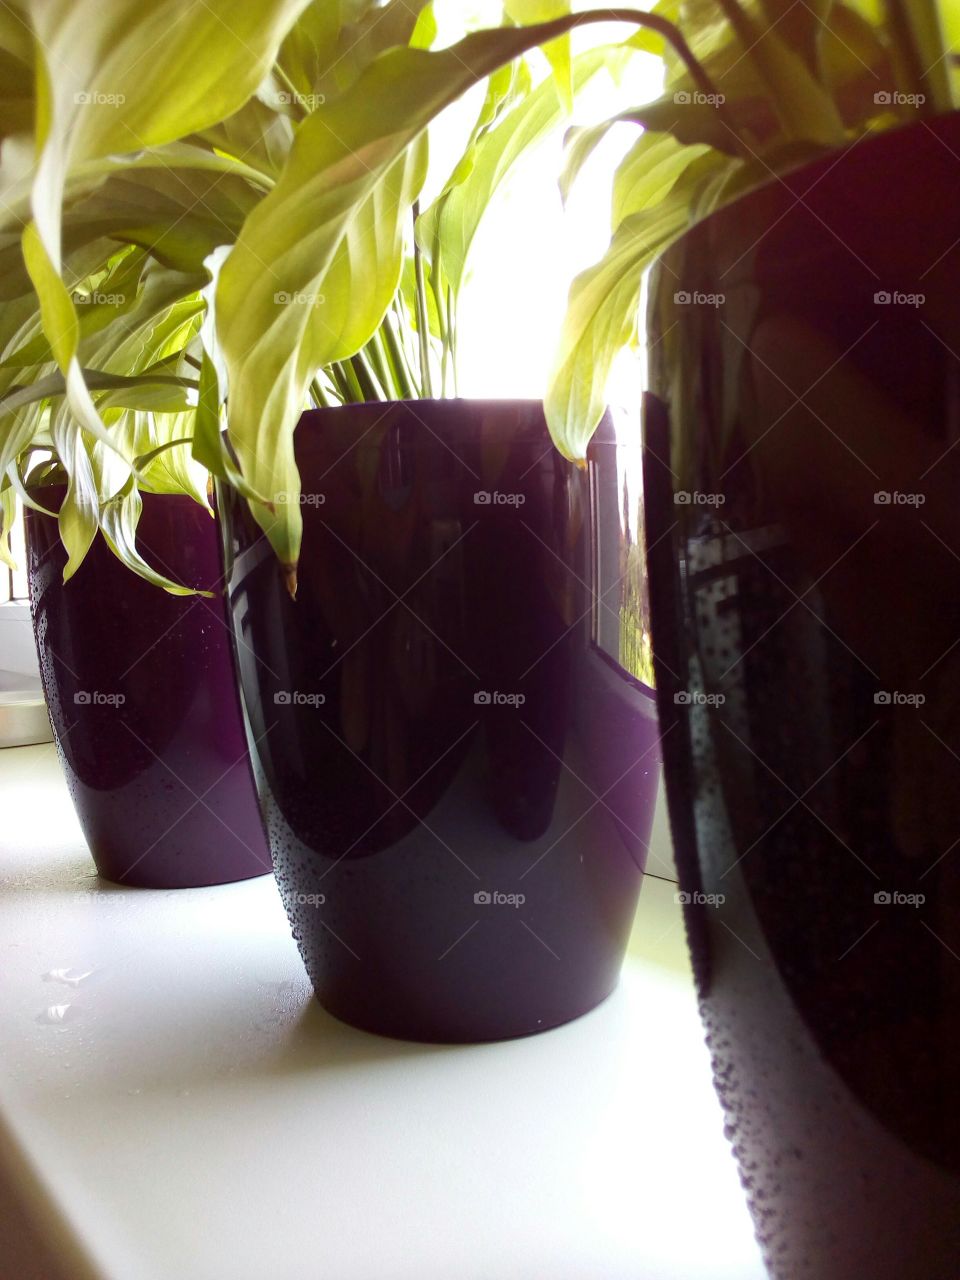 green leaves of house plants in purple pots